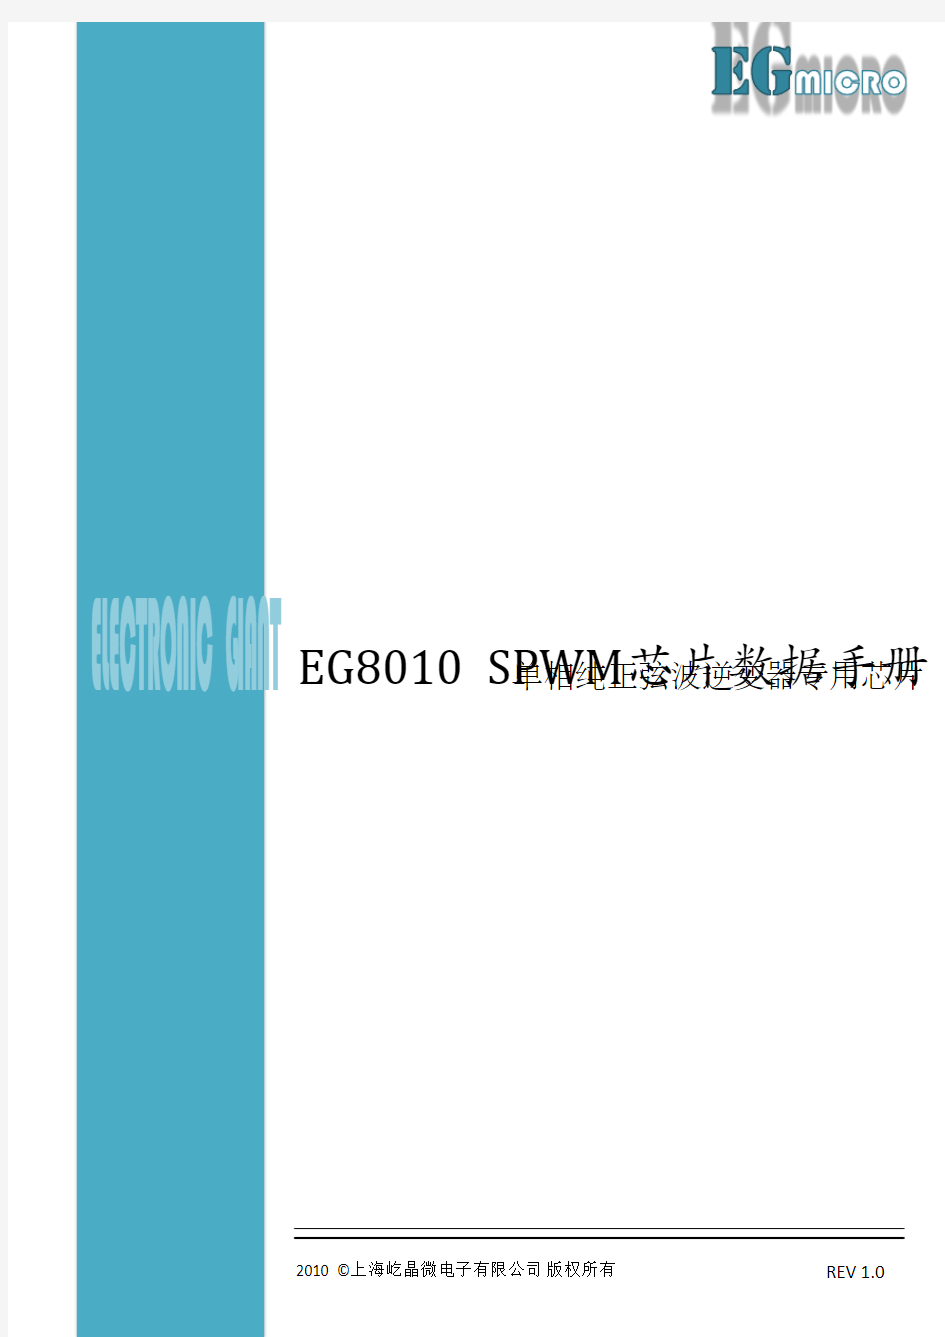 EG8010-SPWM芯片数据手册V1.0201009121